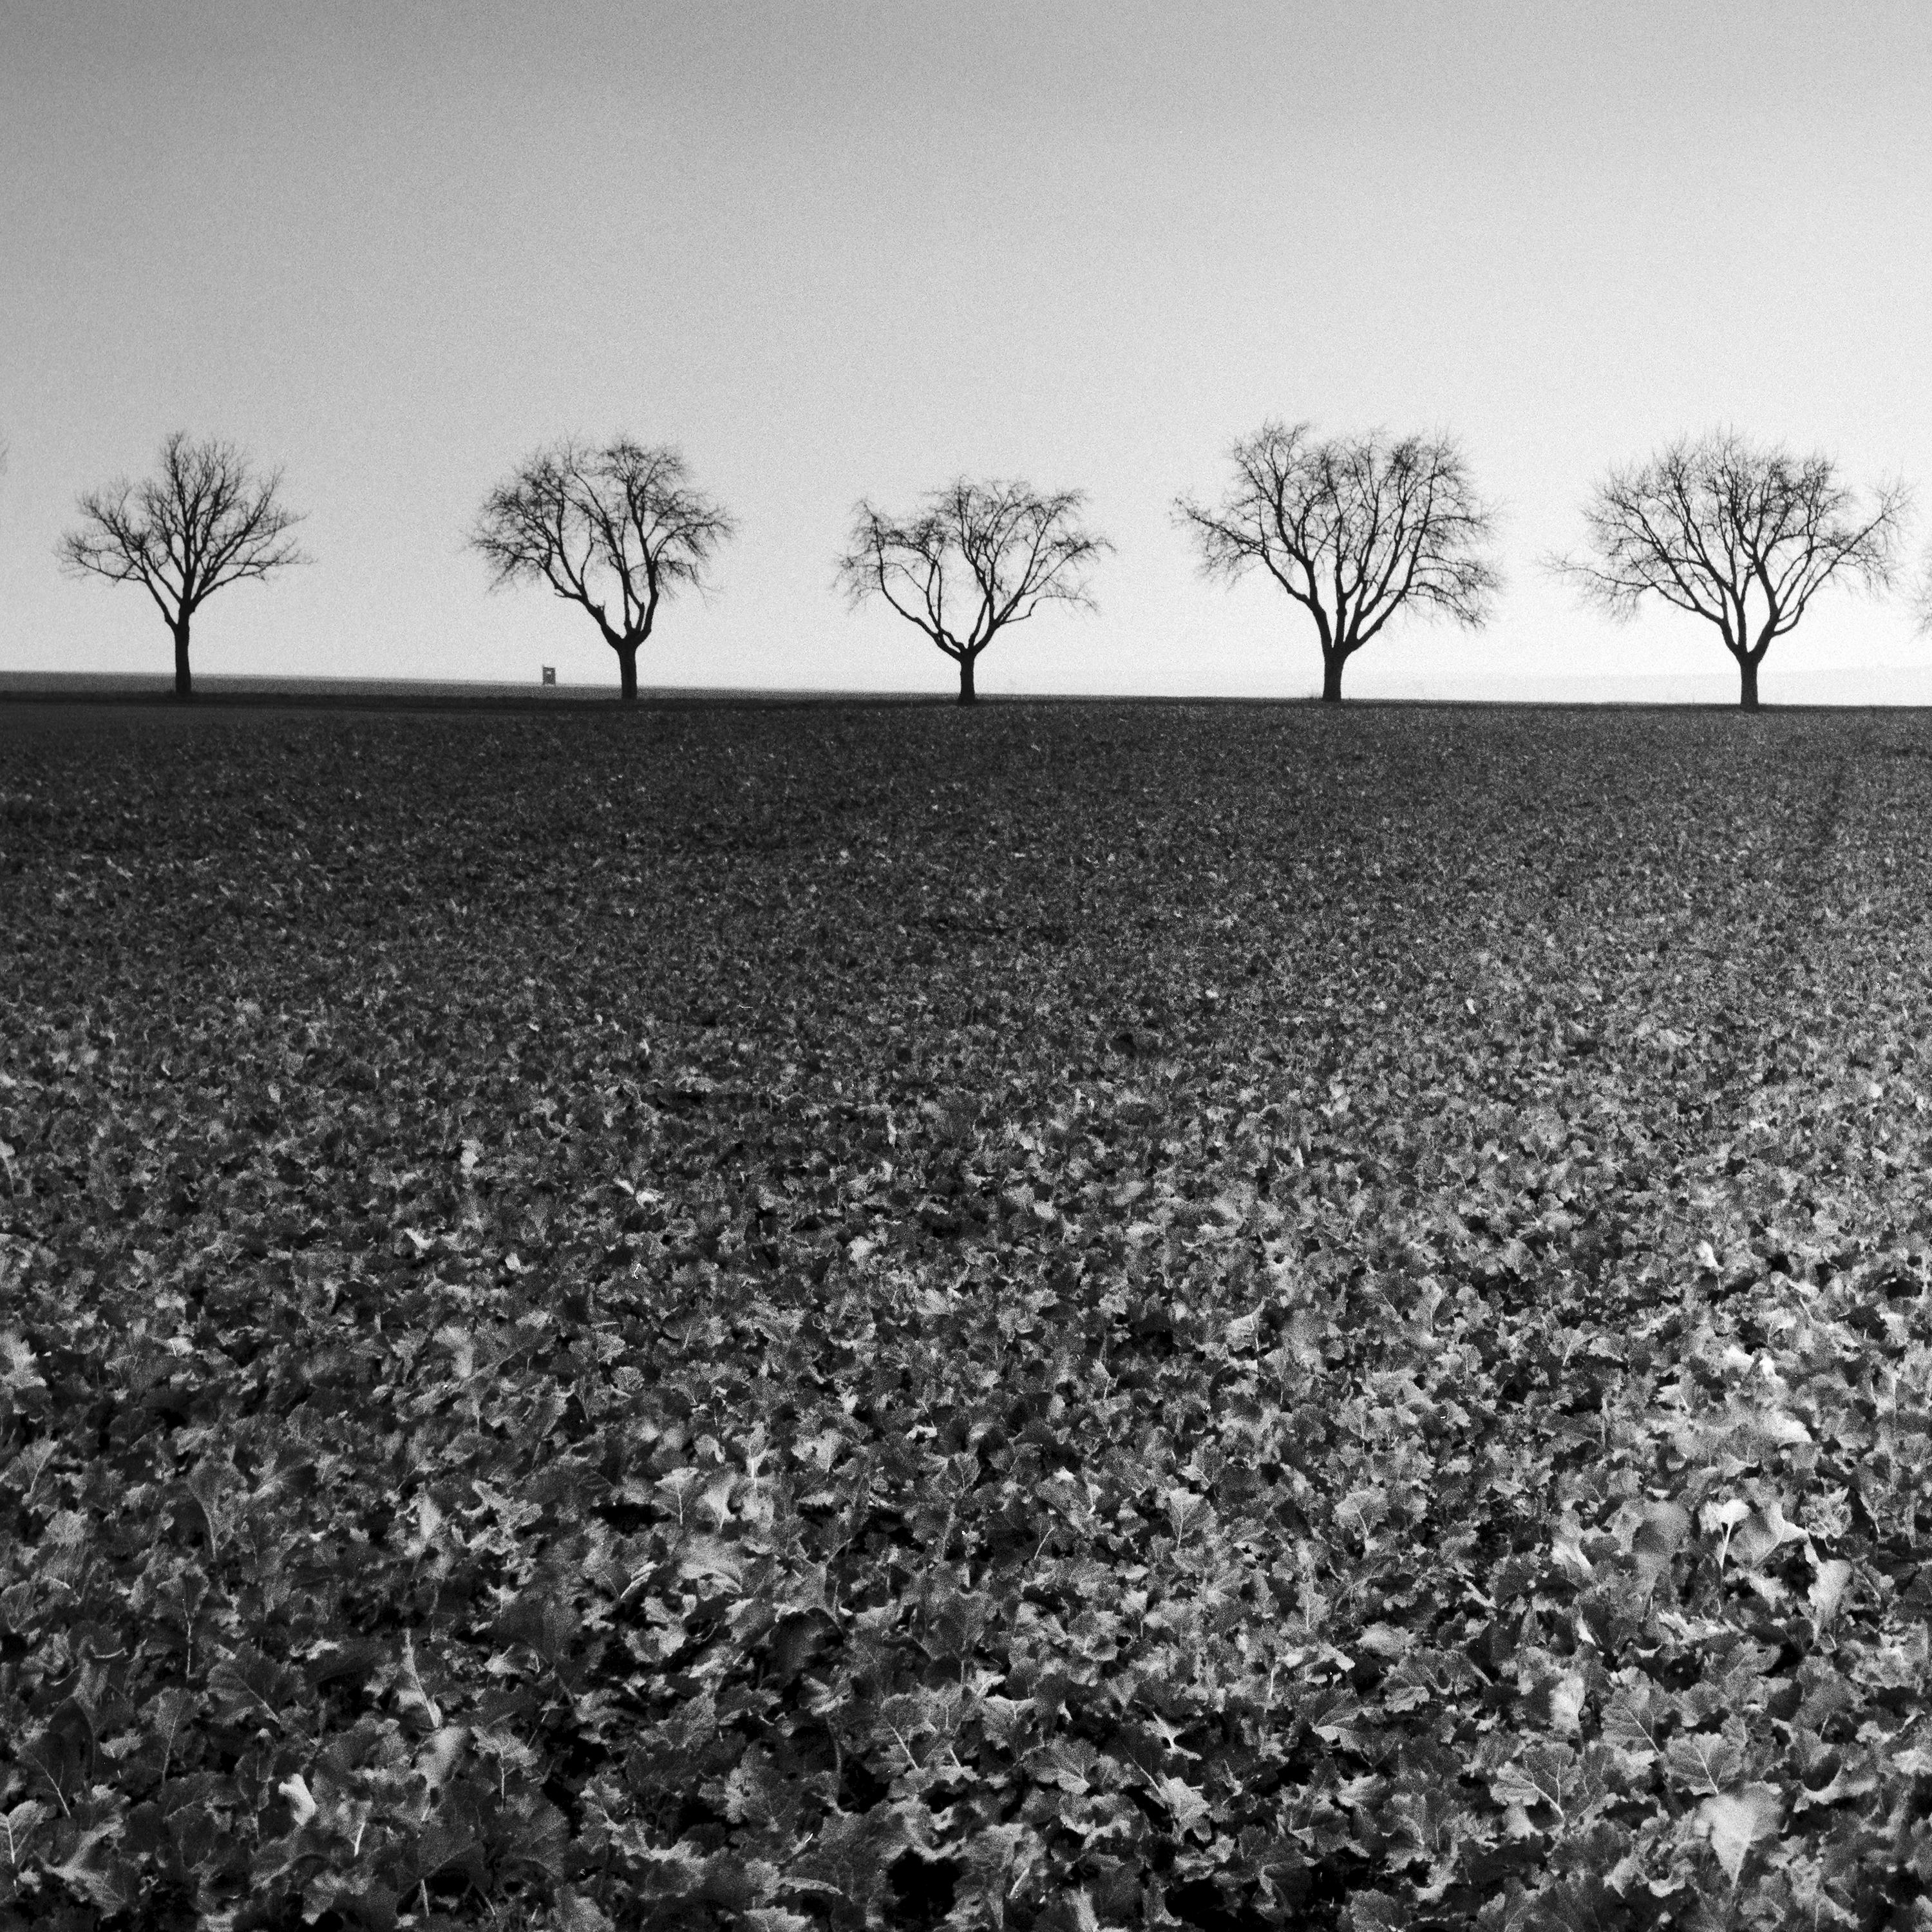 Nine Cherry Trees, Avenue, Austria, black and white landscape photography For Sale 1